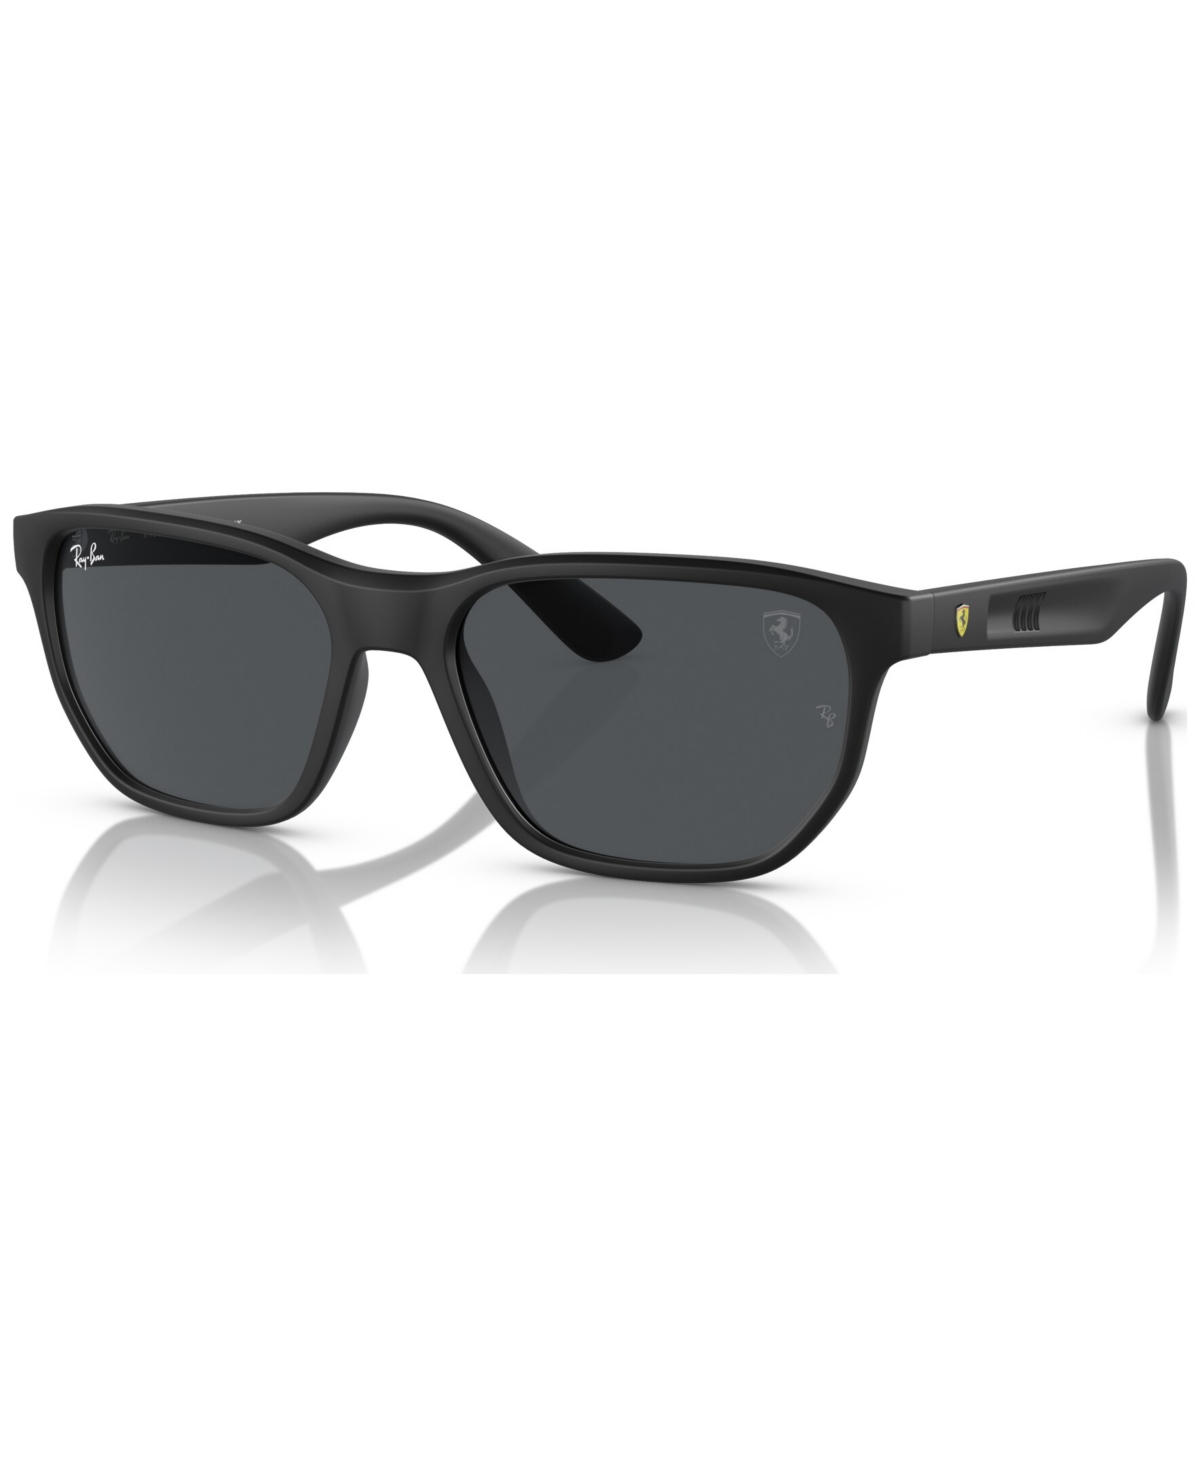 Ray Ban Sunglasses Male Rb4404m Scuderia Ferrari Collection - Black Frame Grey Lenses 57-18